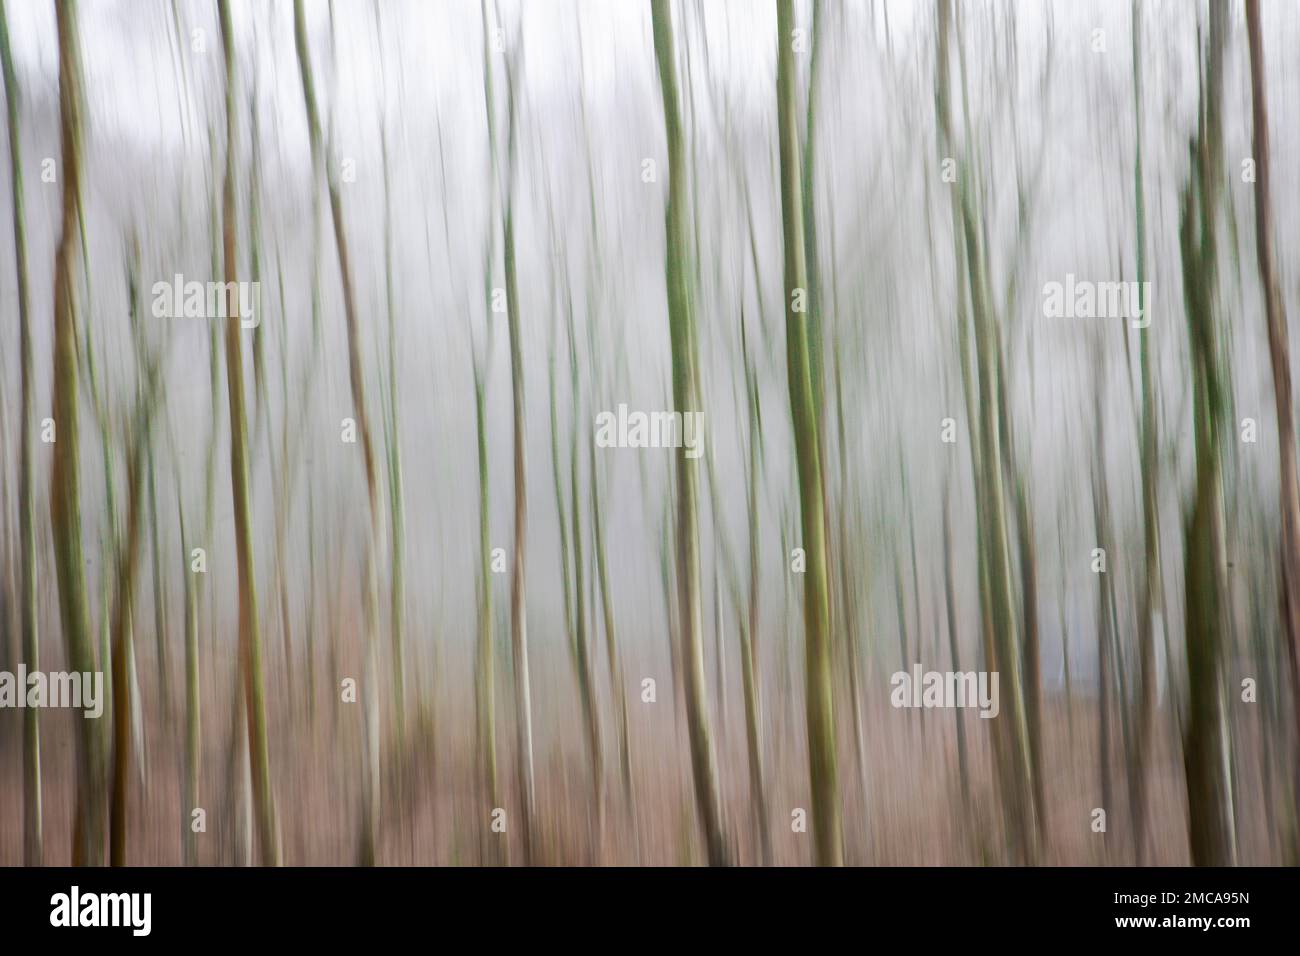 Silver Birches, artistic interpretation using intentional camera movement Stock Photo